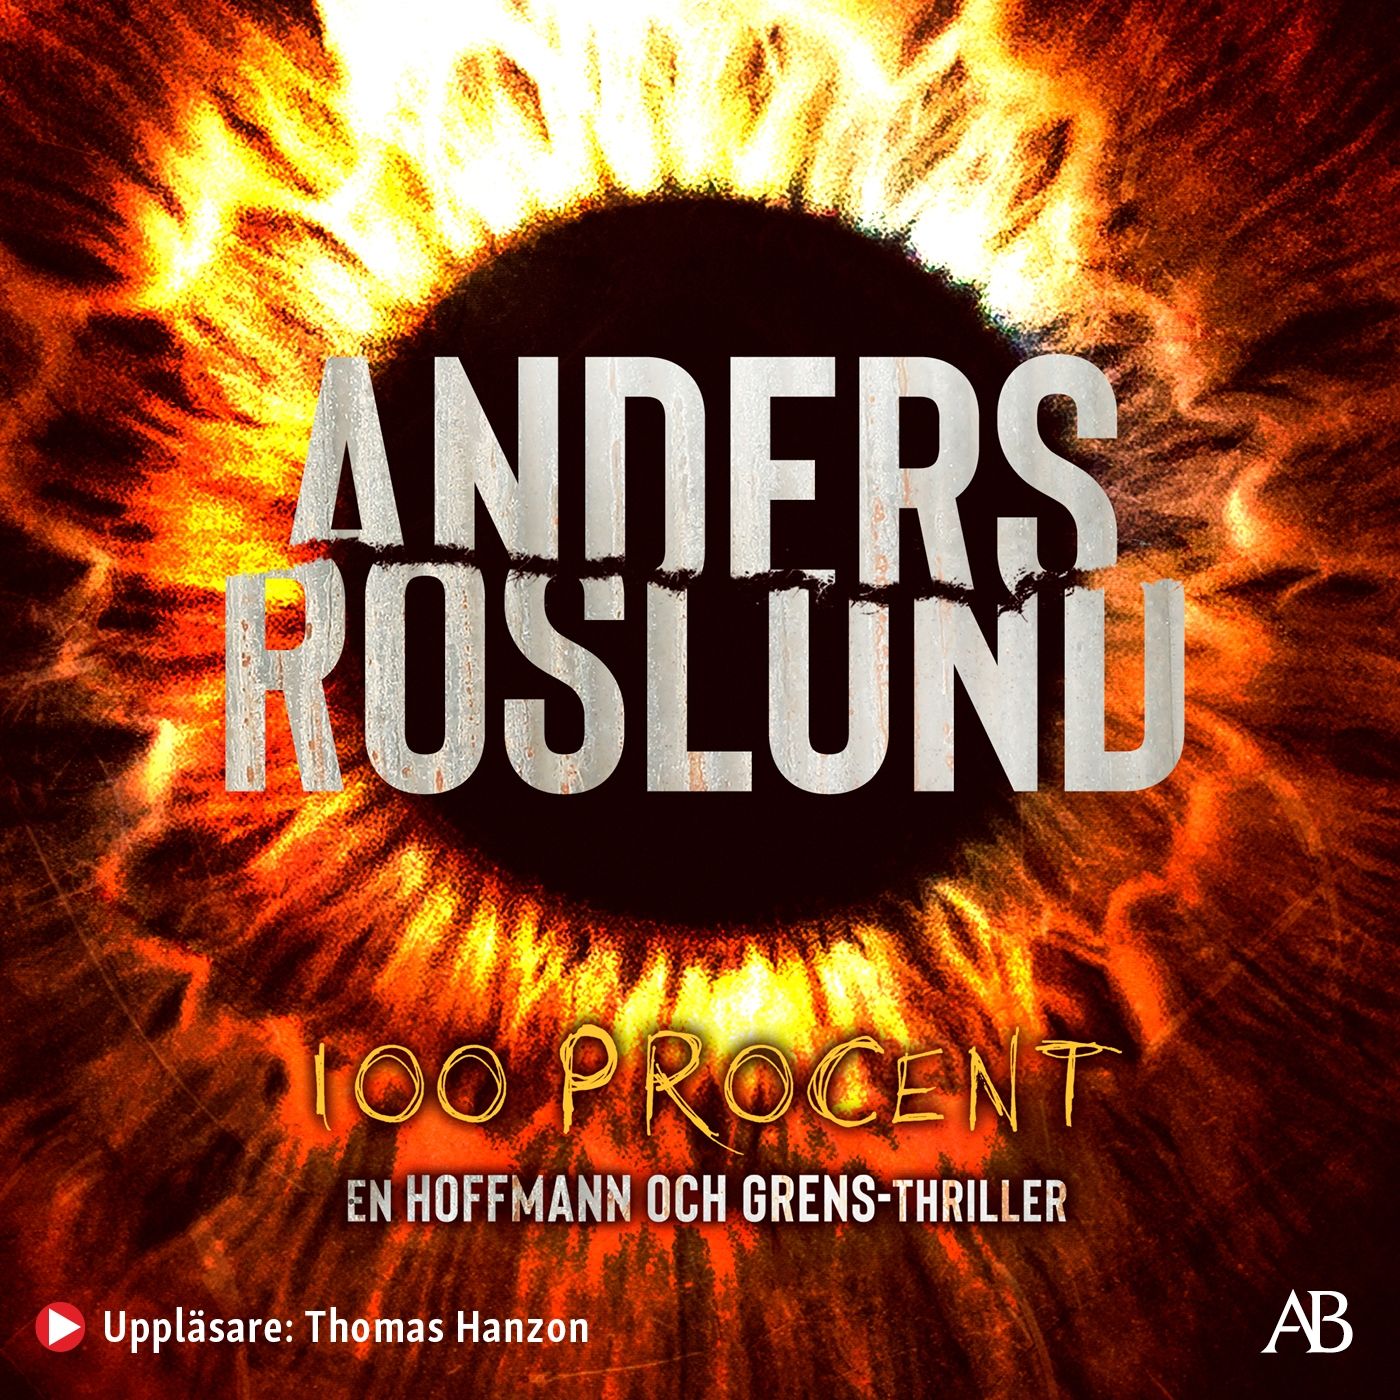 100 procent, ljudbok av Anders Roslund